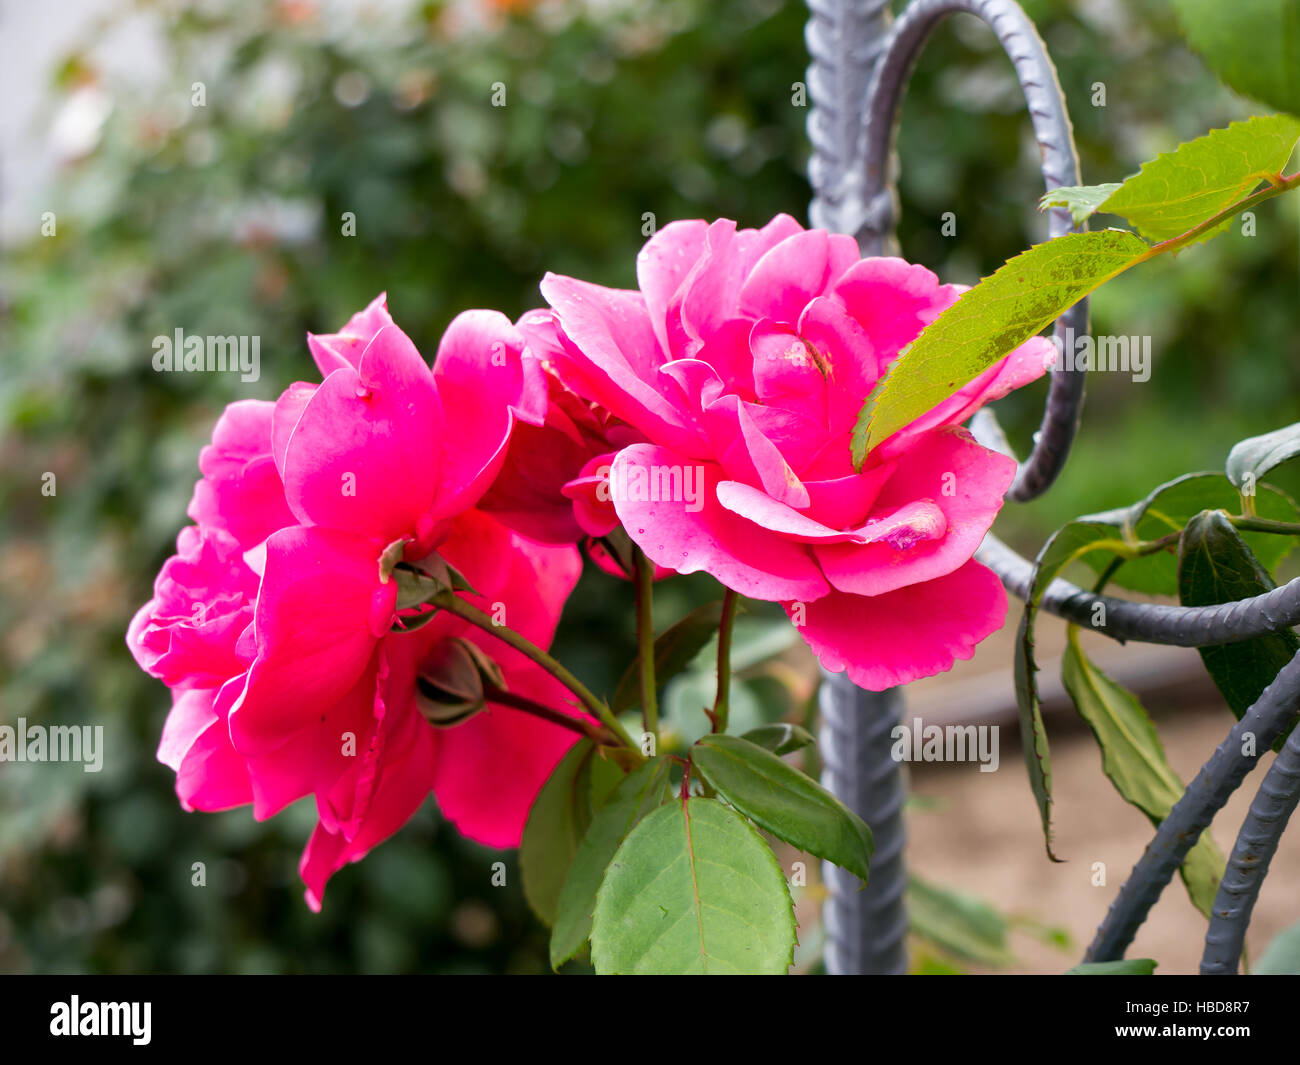 The nature garden flower Rose. Stock Photo